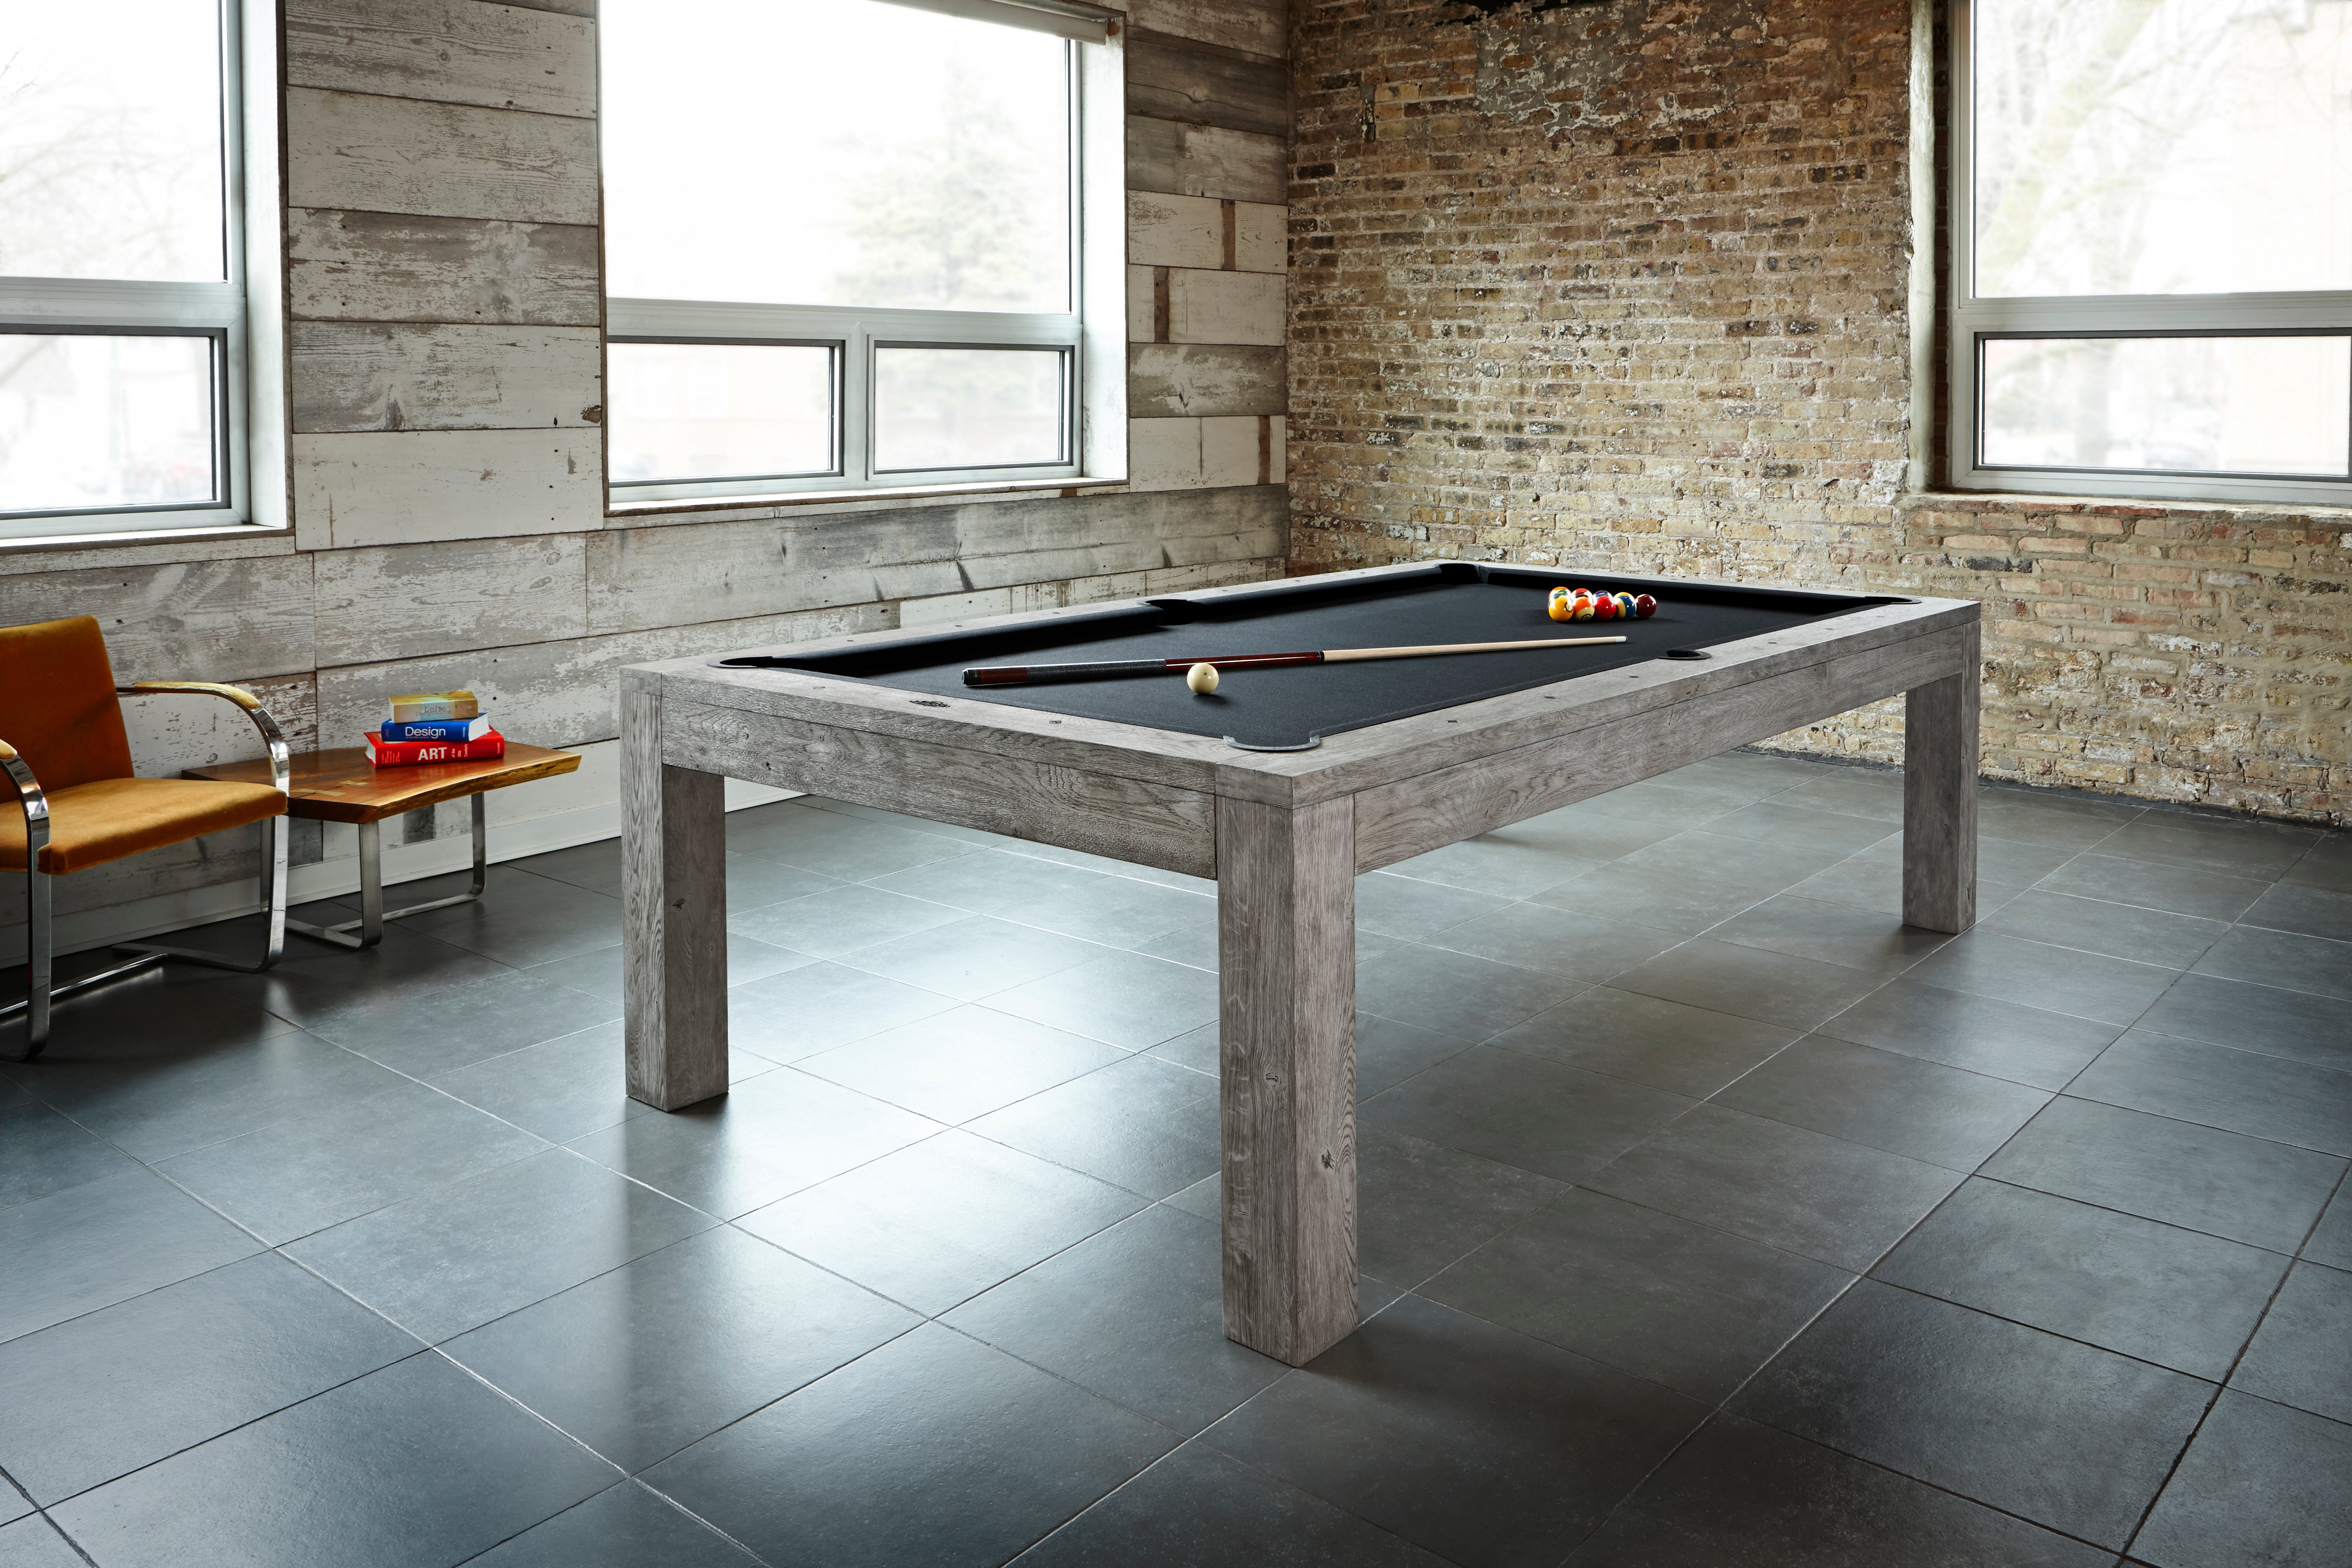 Brunswick Billiards Sanibel 8' Slate Pool Table in Rustic Grey